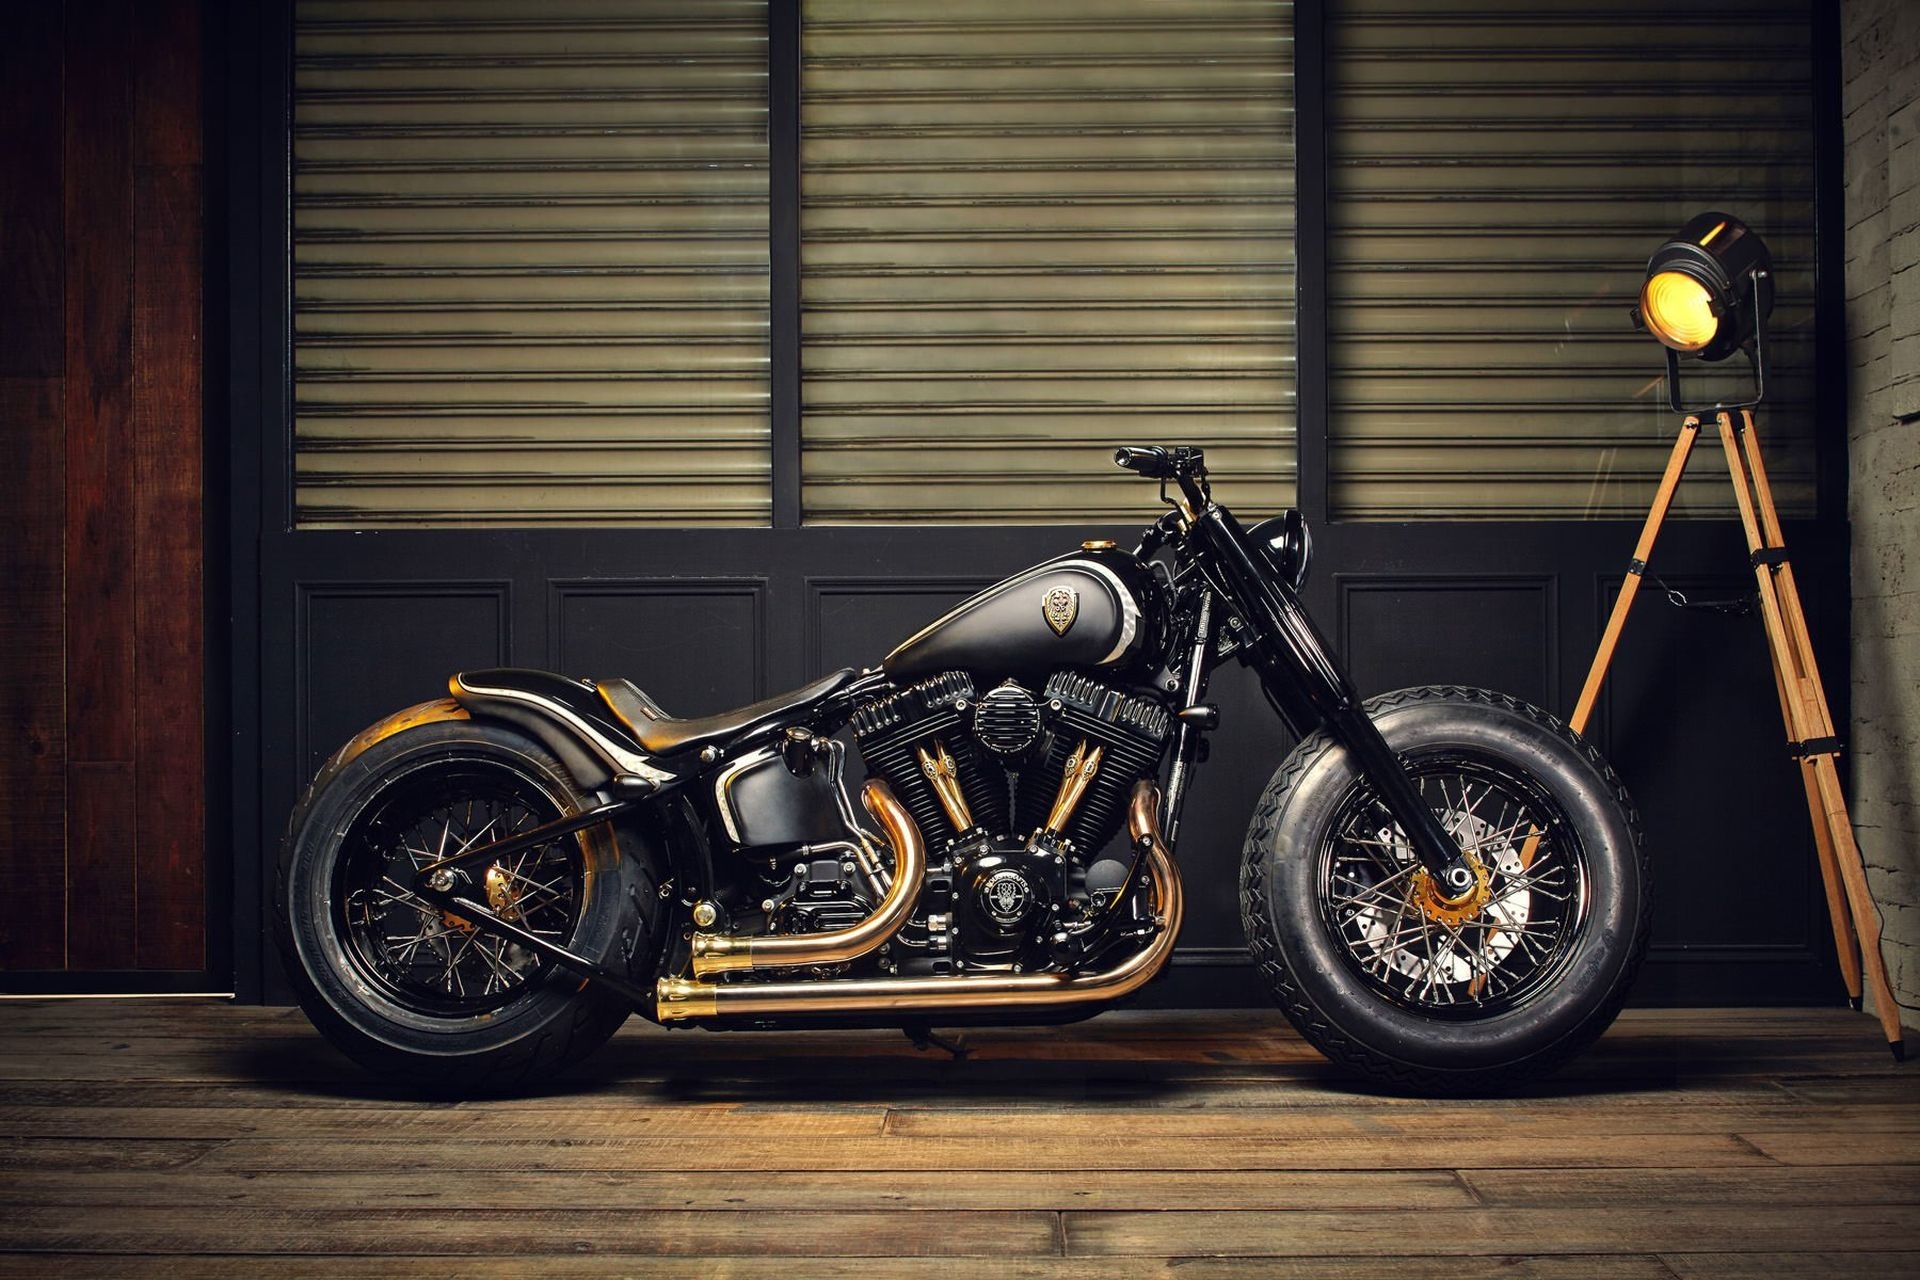 Стили байков. Мотоцикл боббер Harley Davidson. Чоппер мотоцикл Харлей Дэвидсон. Харлей Дэвидсон софтейл боббер. Мотоцикл Harley Davidson Custom.